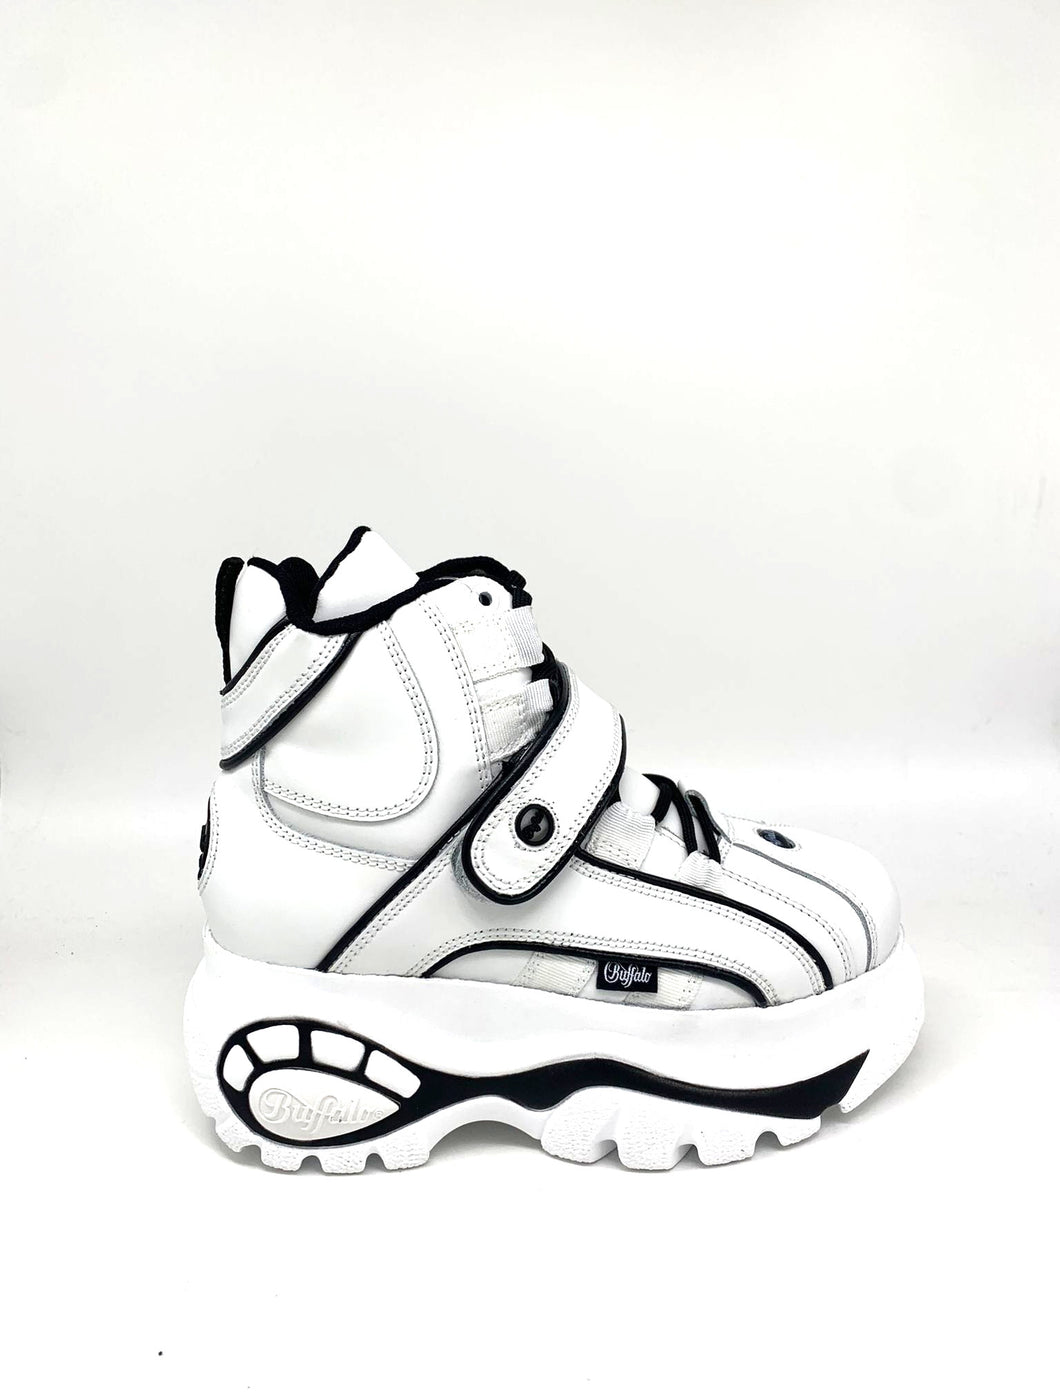 Buffalo London Classic Boots Shoes Plateau Schuhe 90er White/Black Weiß Schwarz 1348-14 2.0 (Limited by ModeRockCenter)